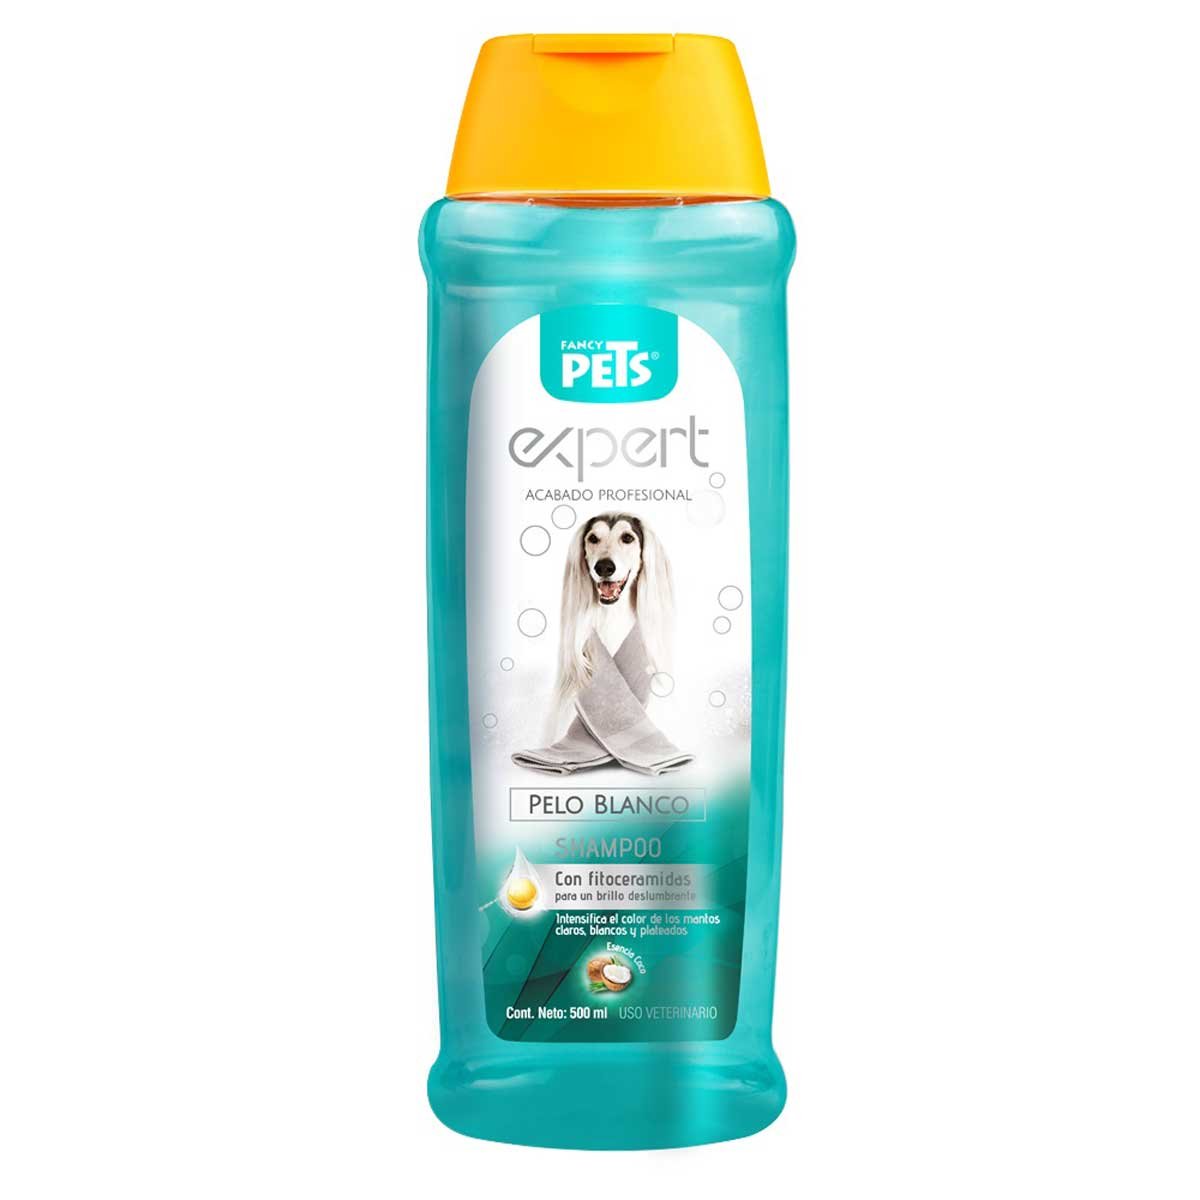 Shampoo para Pelo Blanco Expert 500Ml Acuario Lomas para Perro